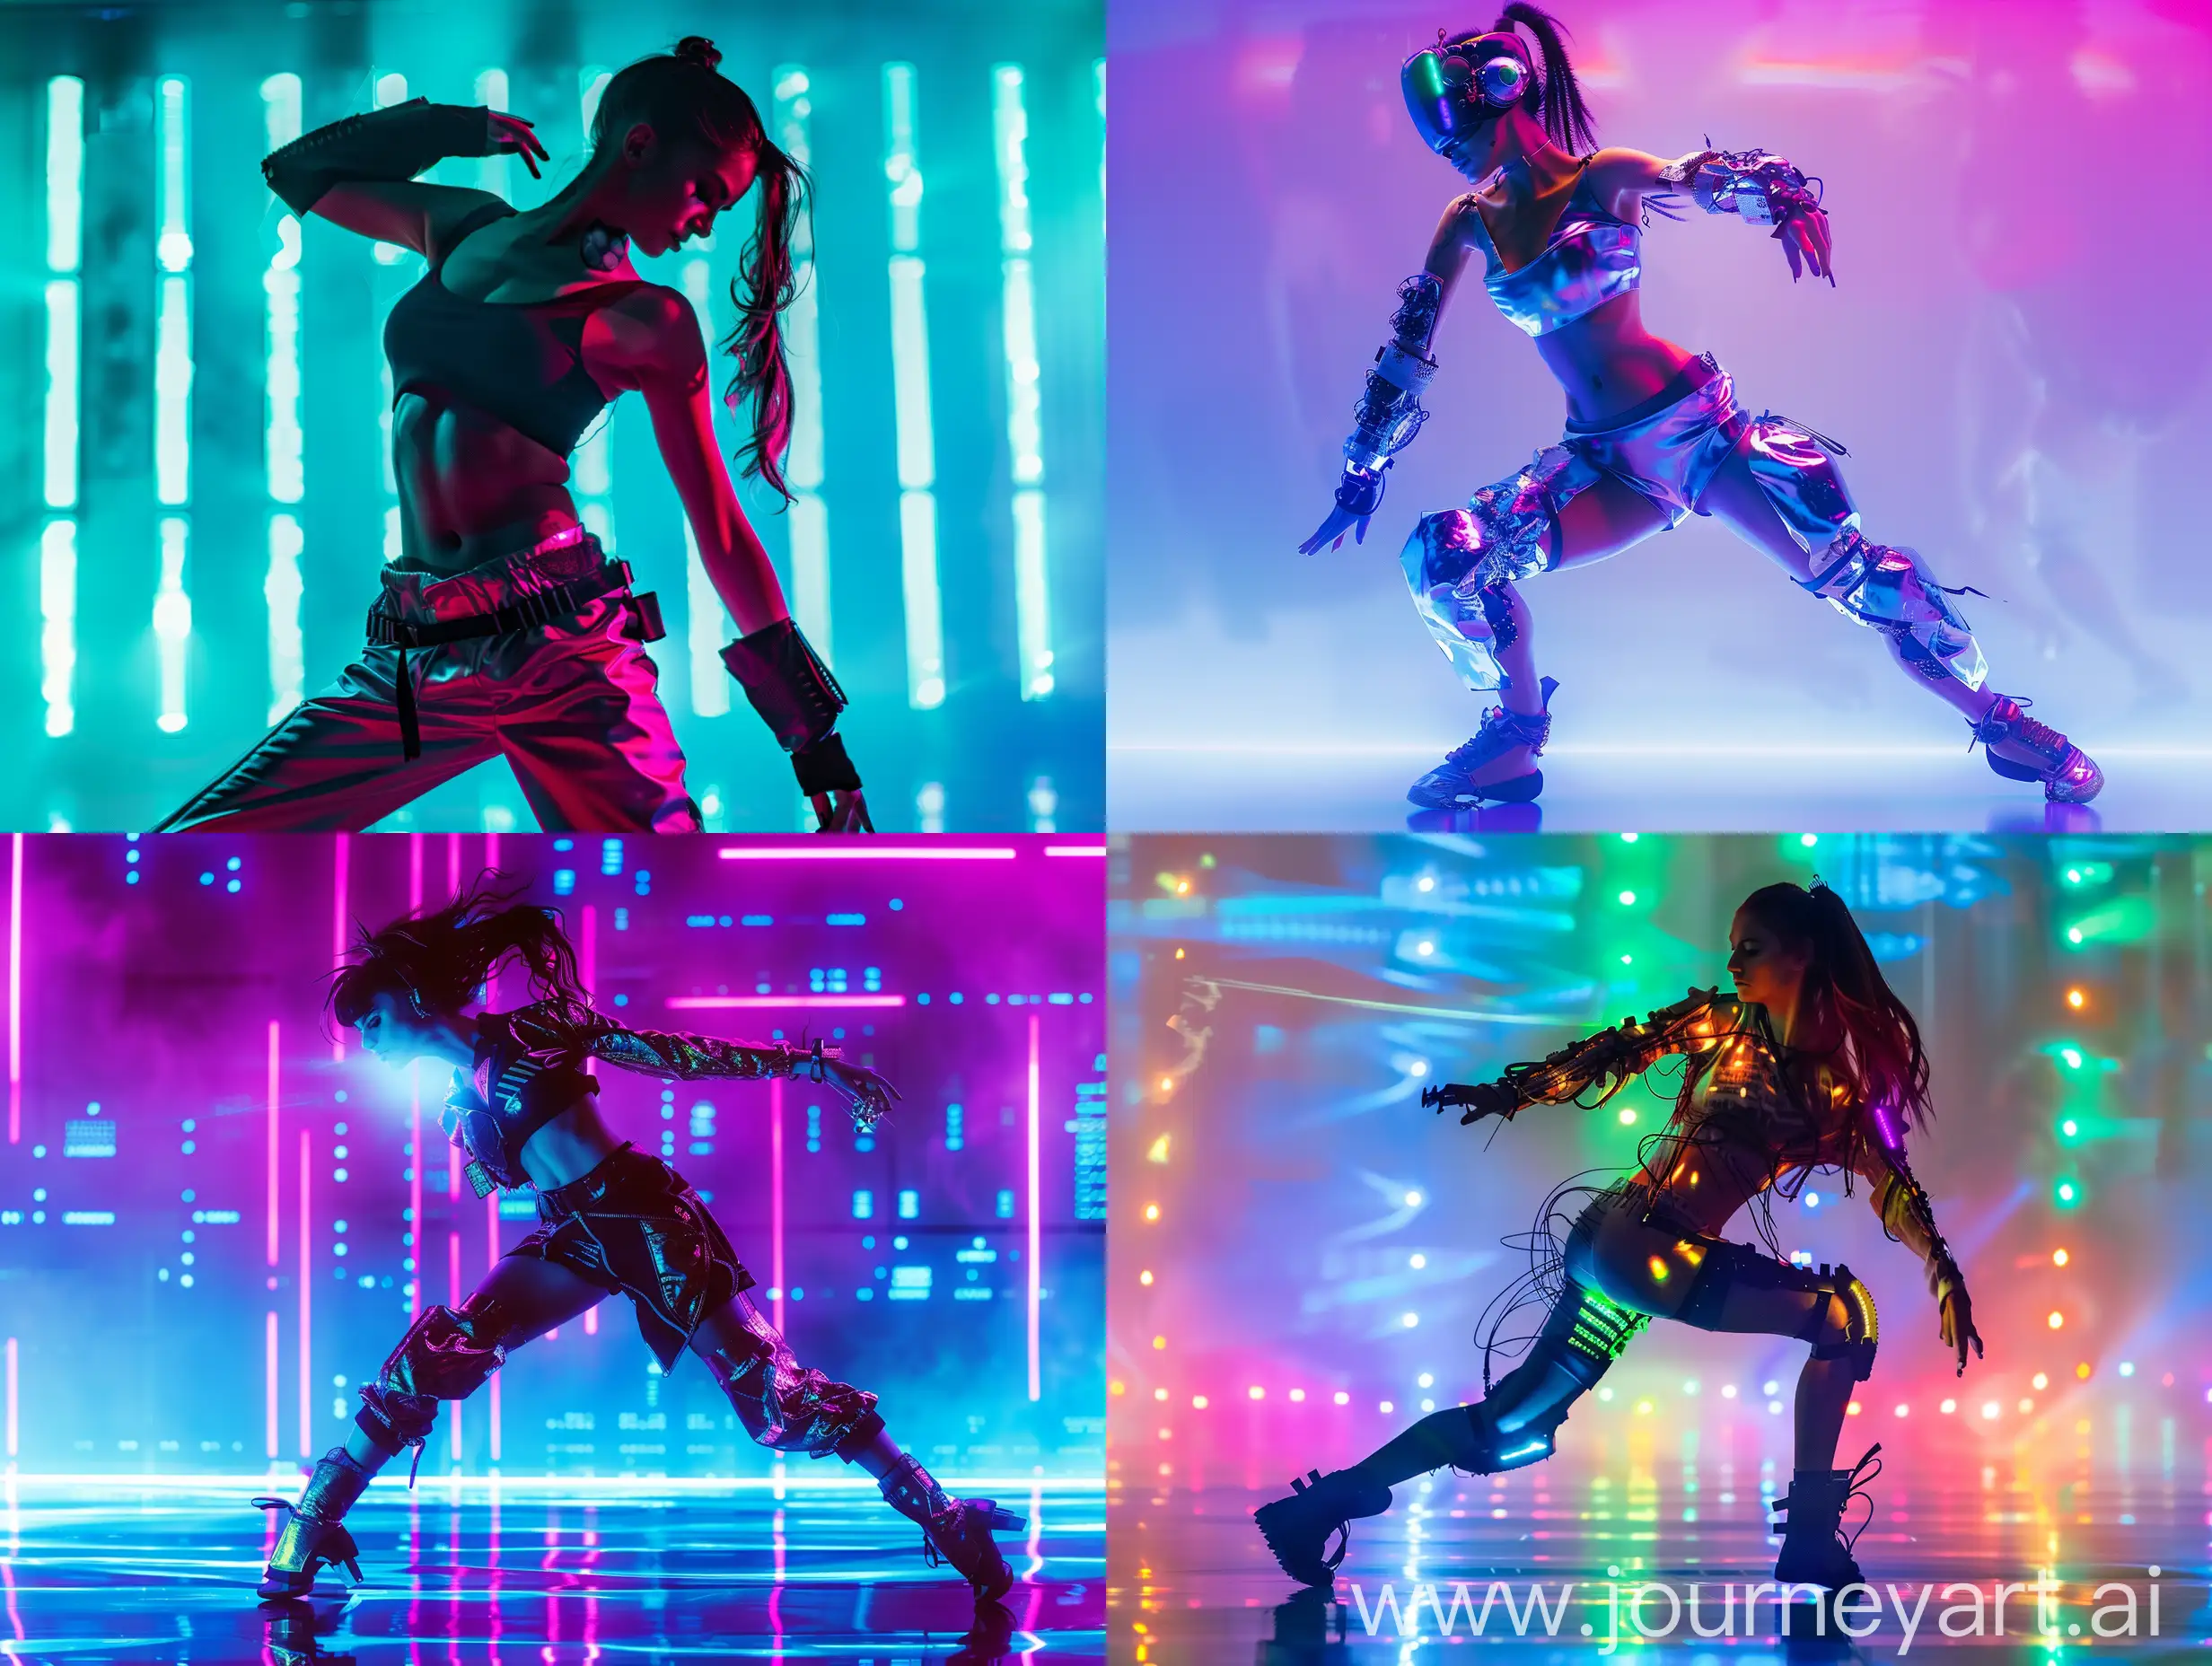 Futuristic-Cyberpunk-Woman-Dancing-in-Vibrant-Colors